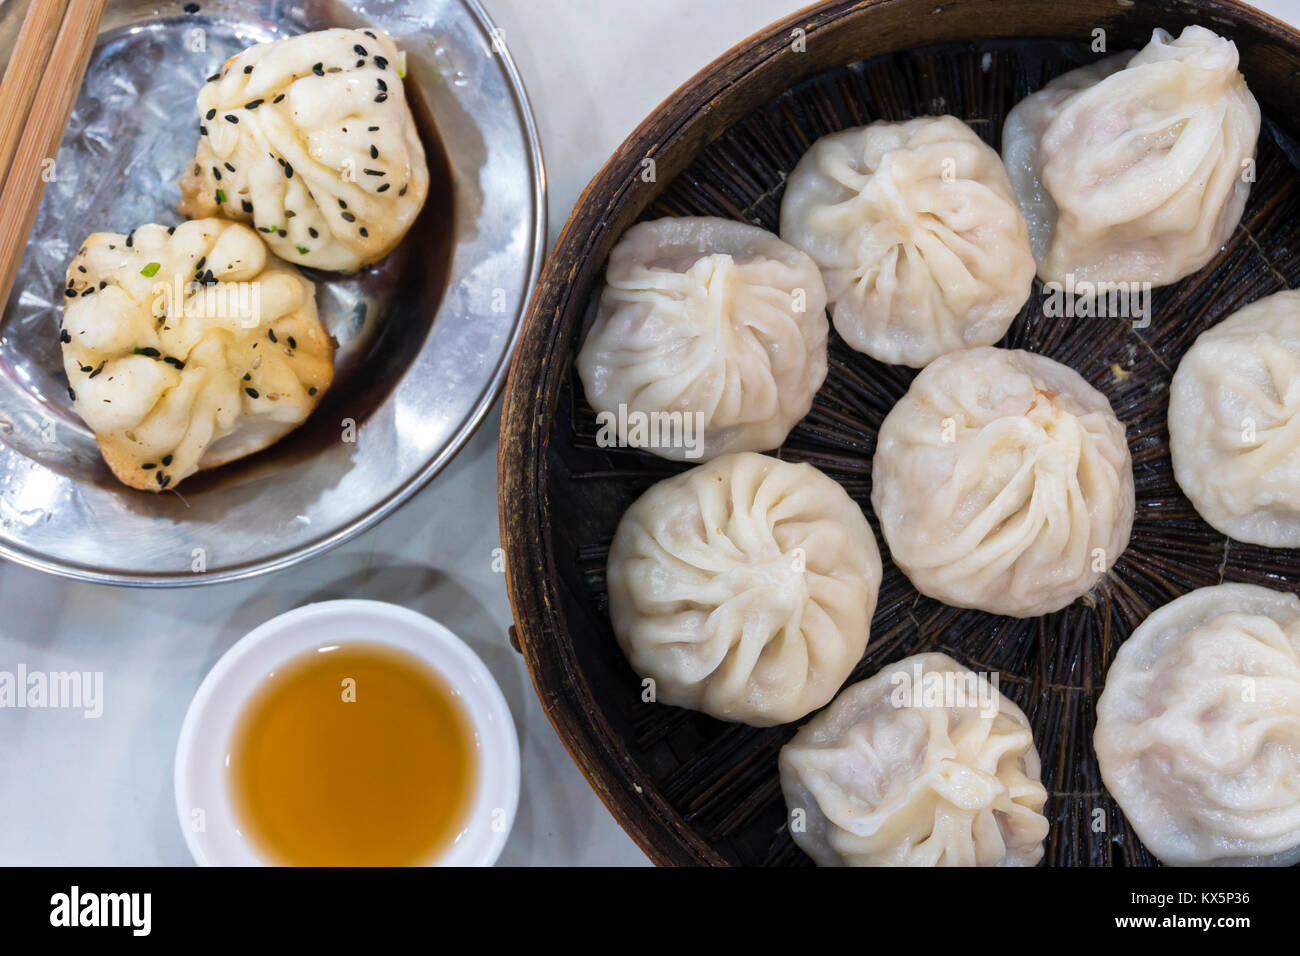 Traditional Shanghai food including dumpling, wonton and xiaolongbao Stock Photo